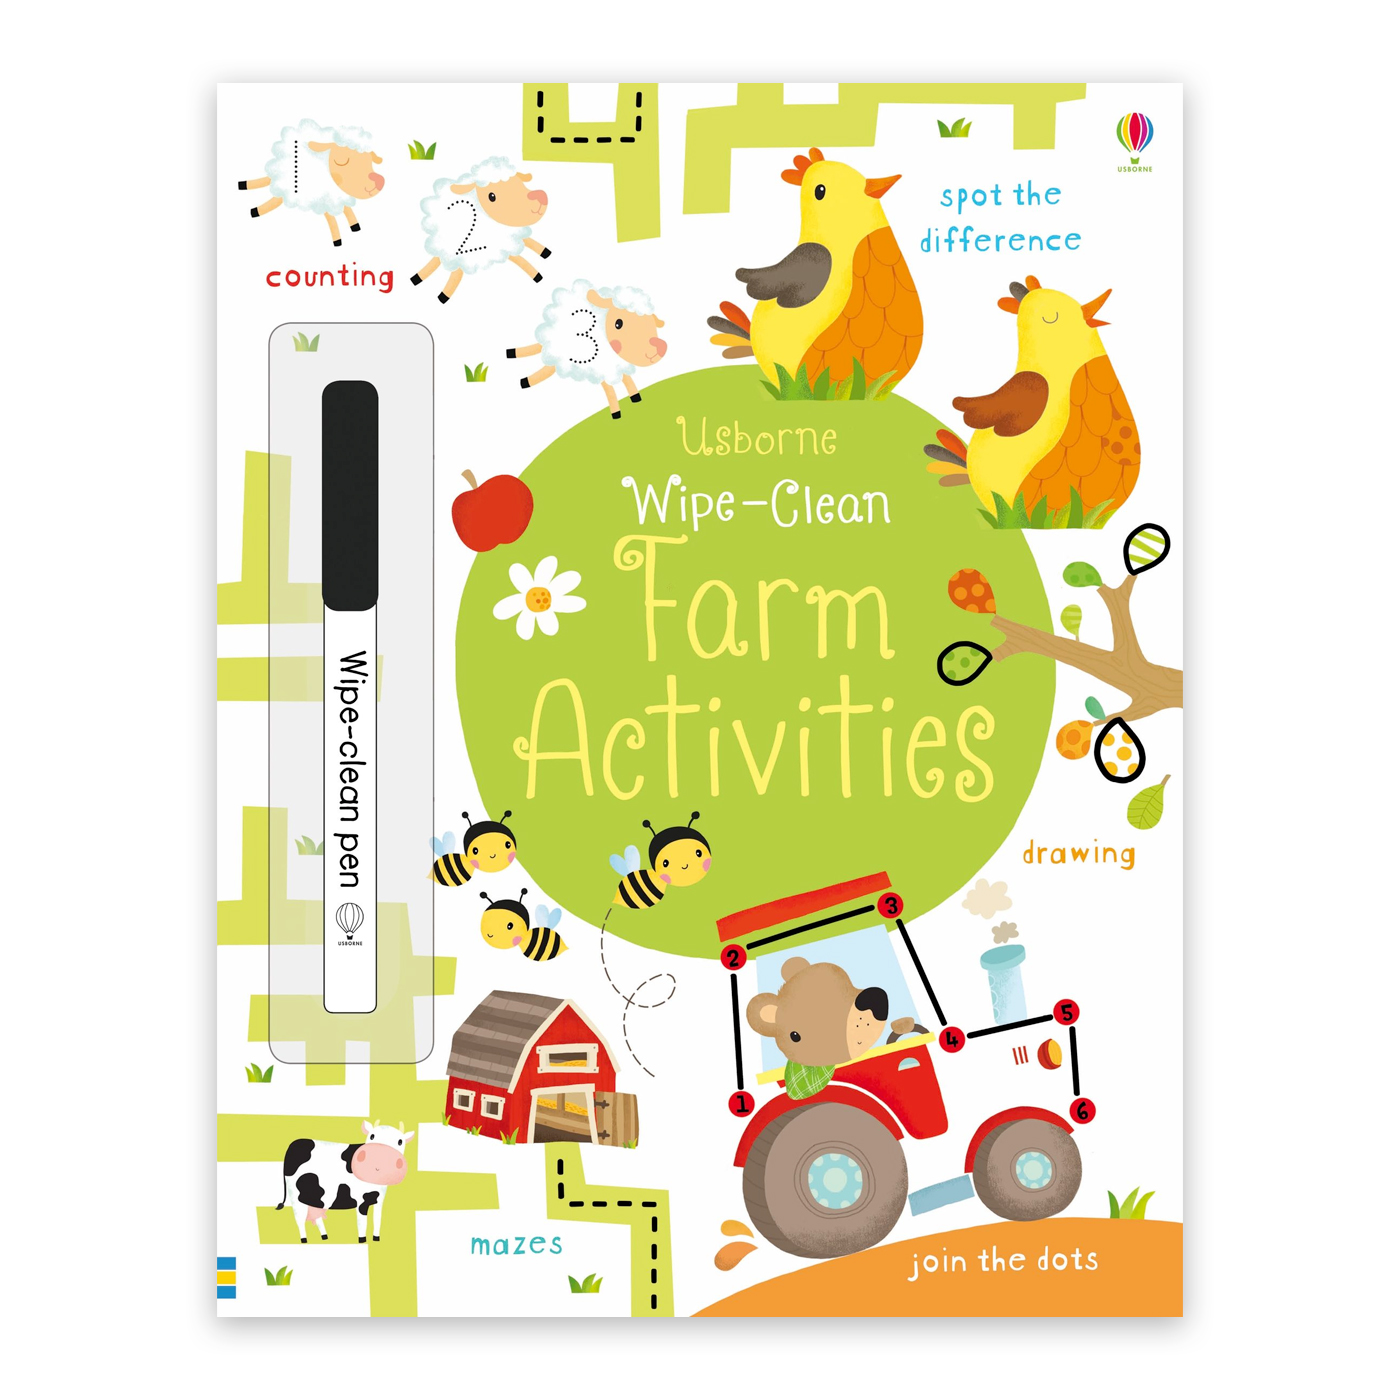  Wipe-Clean Farm Activities